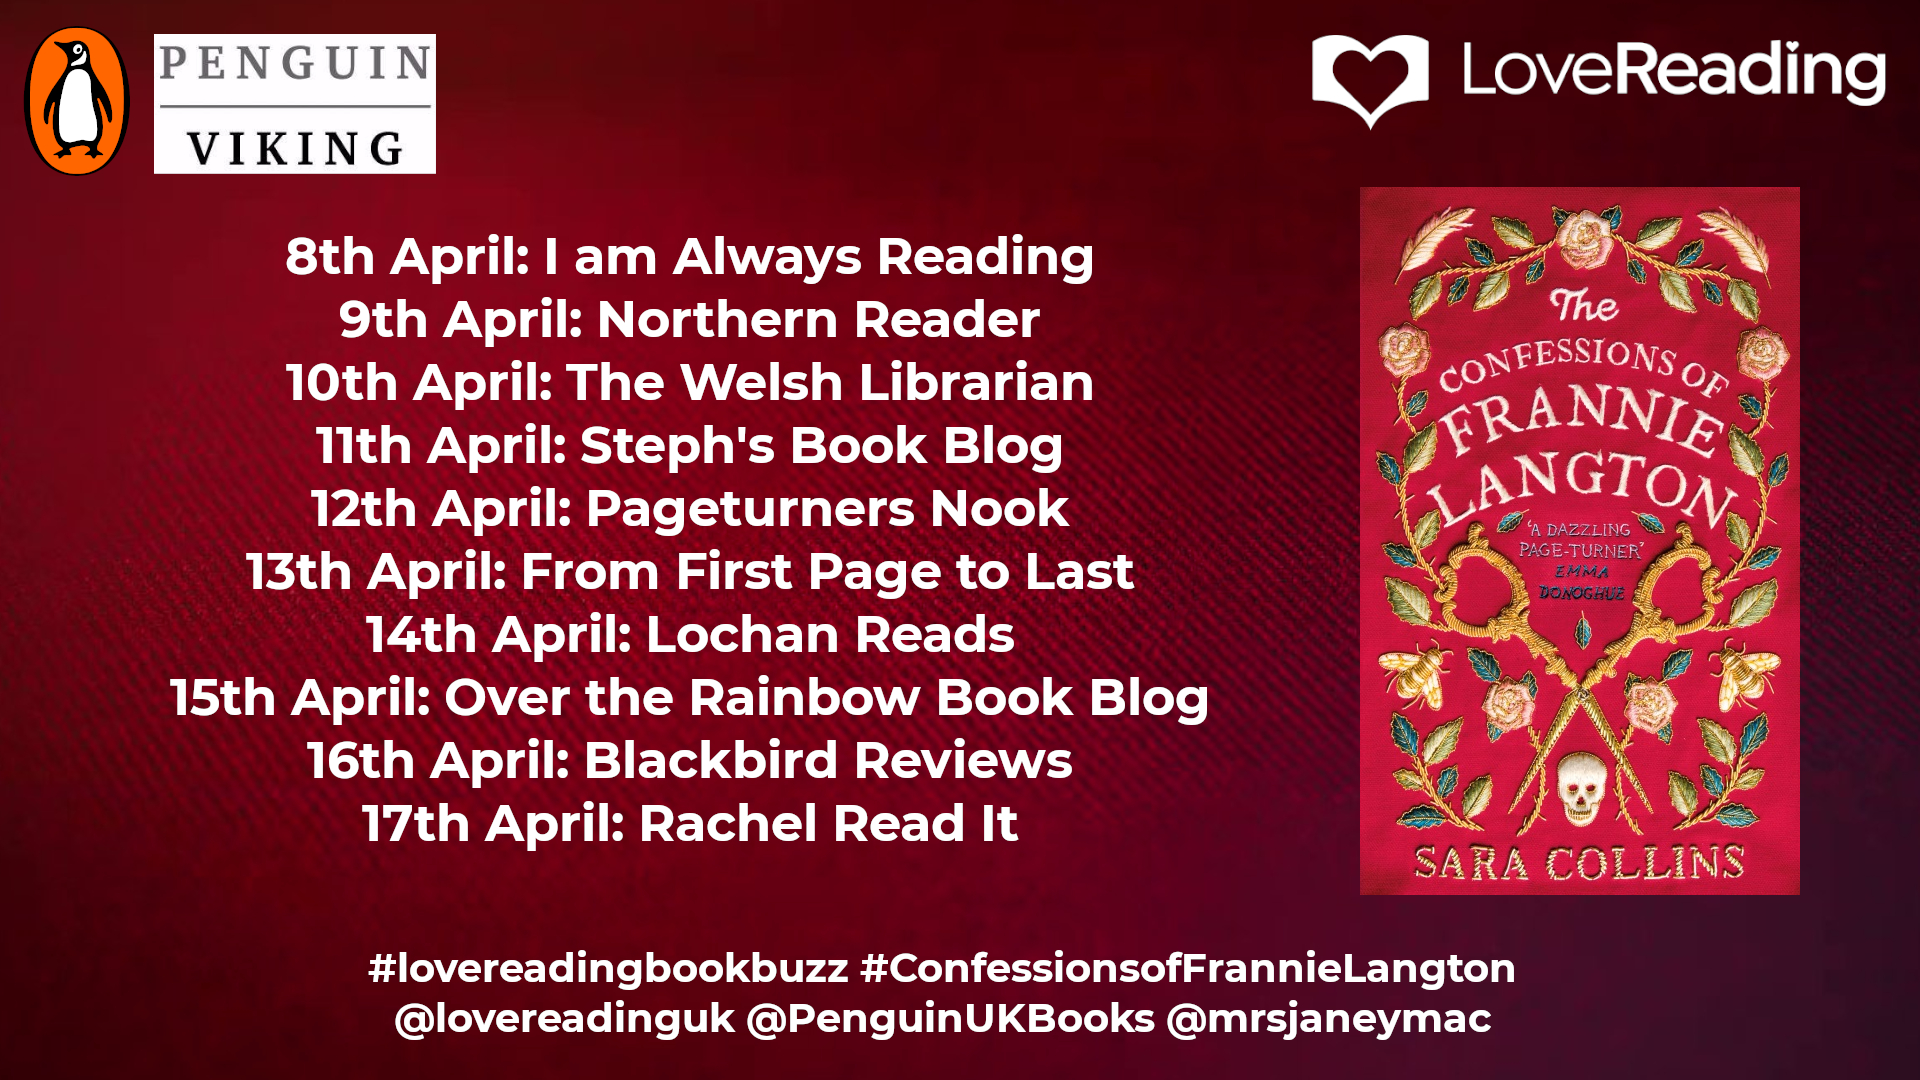 The Confession of Frannie Langton Ambassador Book Buzz Poster